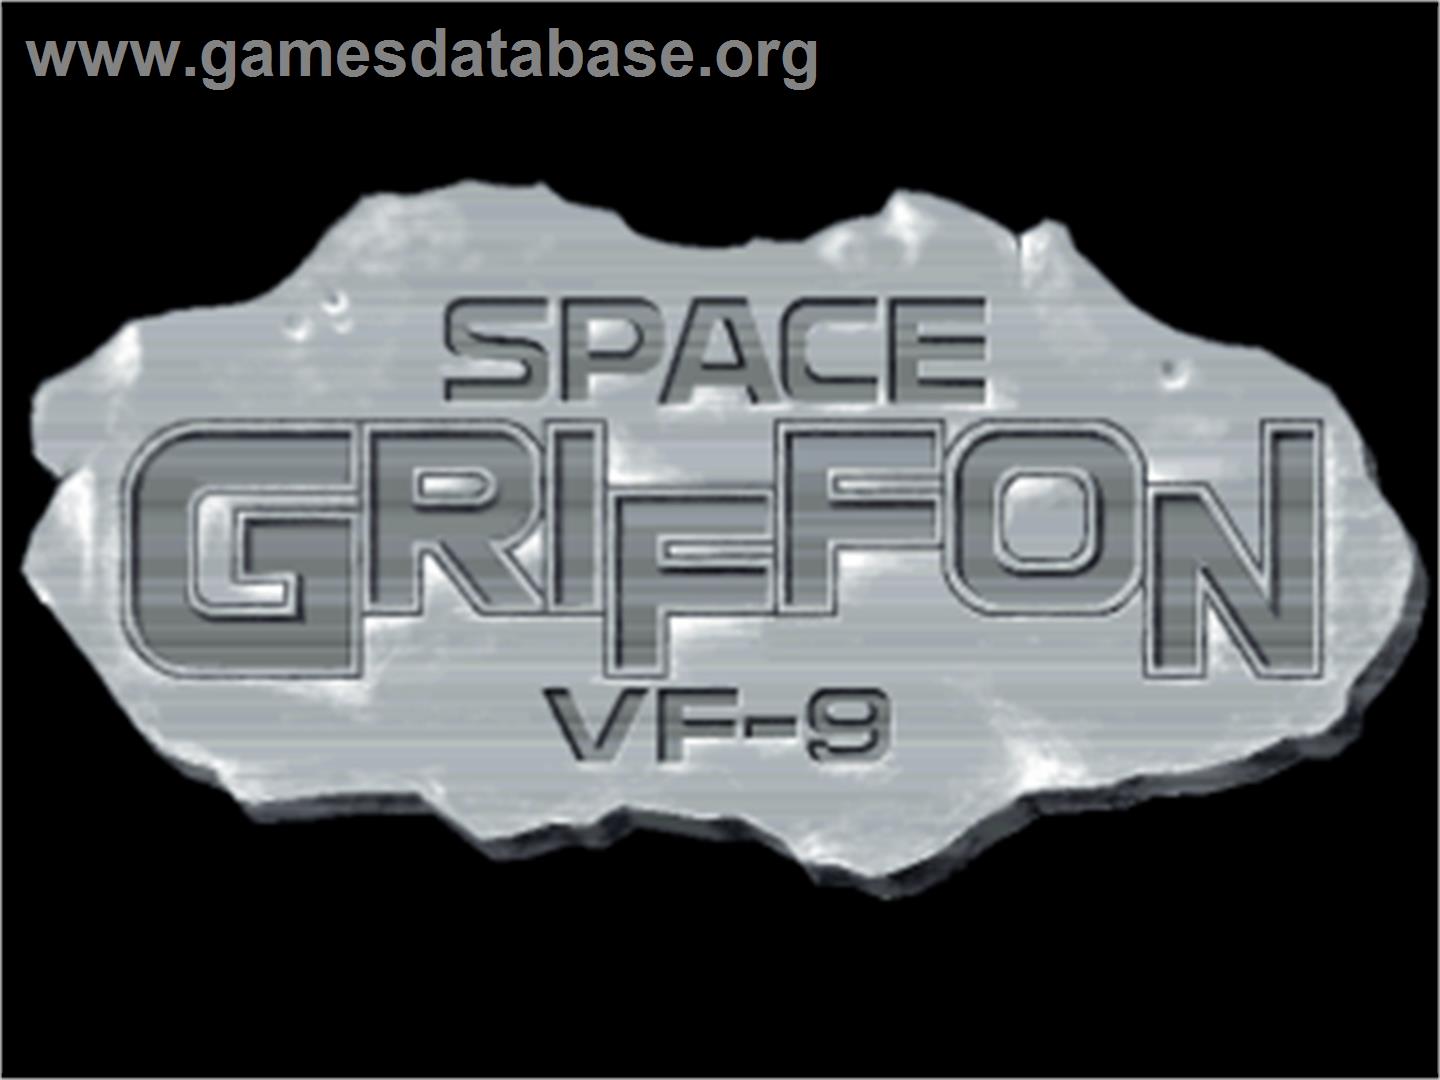 Space Griffon VF-9 - Sony Playstation - Artwork - Title Screen